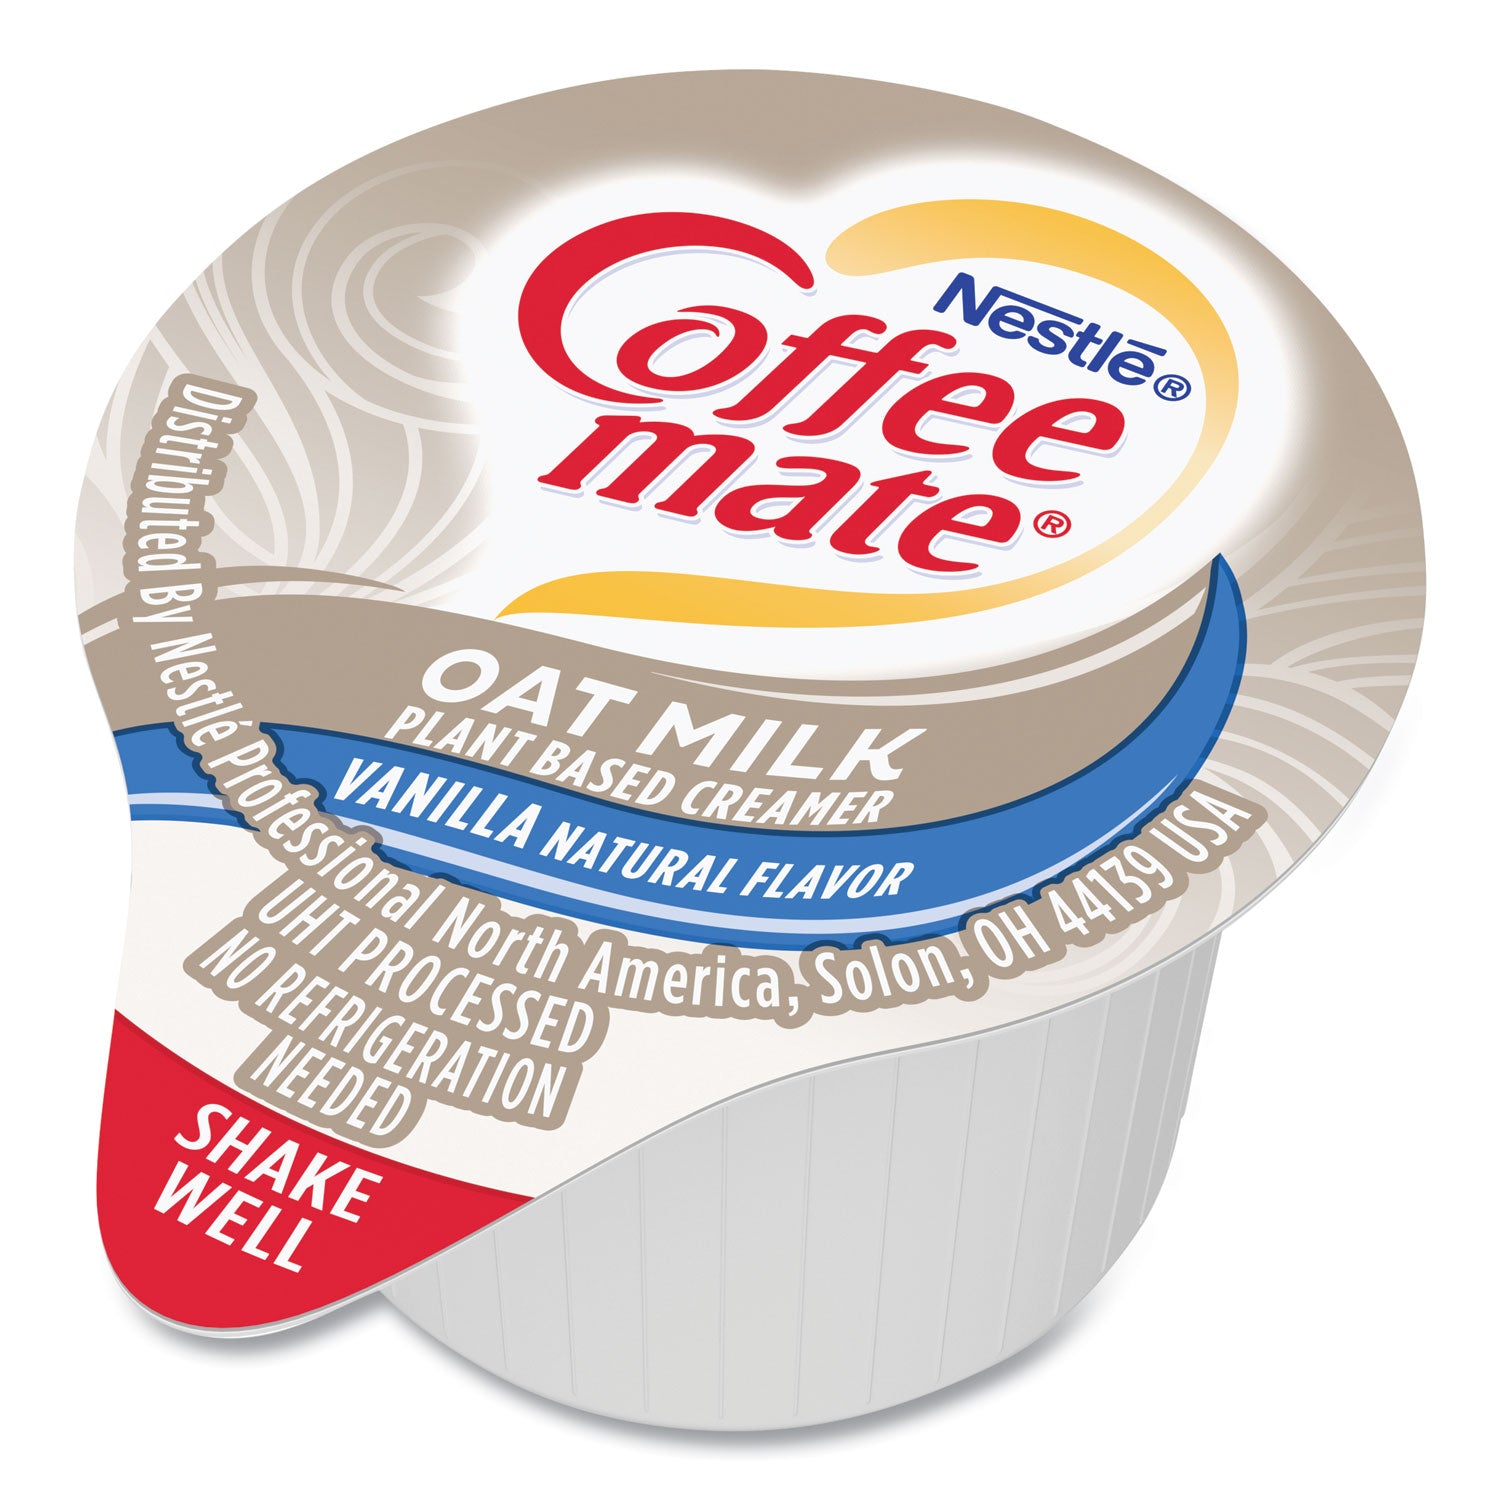 Coffee mate® Plant-Based Oat Milk Liquid Creamers, Natural Vanilla, 0.38 oz Mini Cups, 50/Box - Flipcost